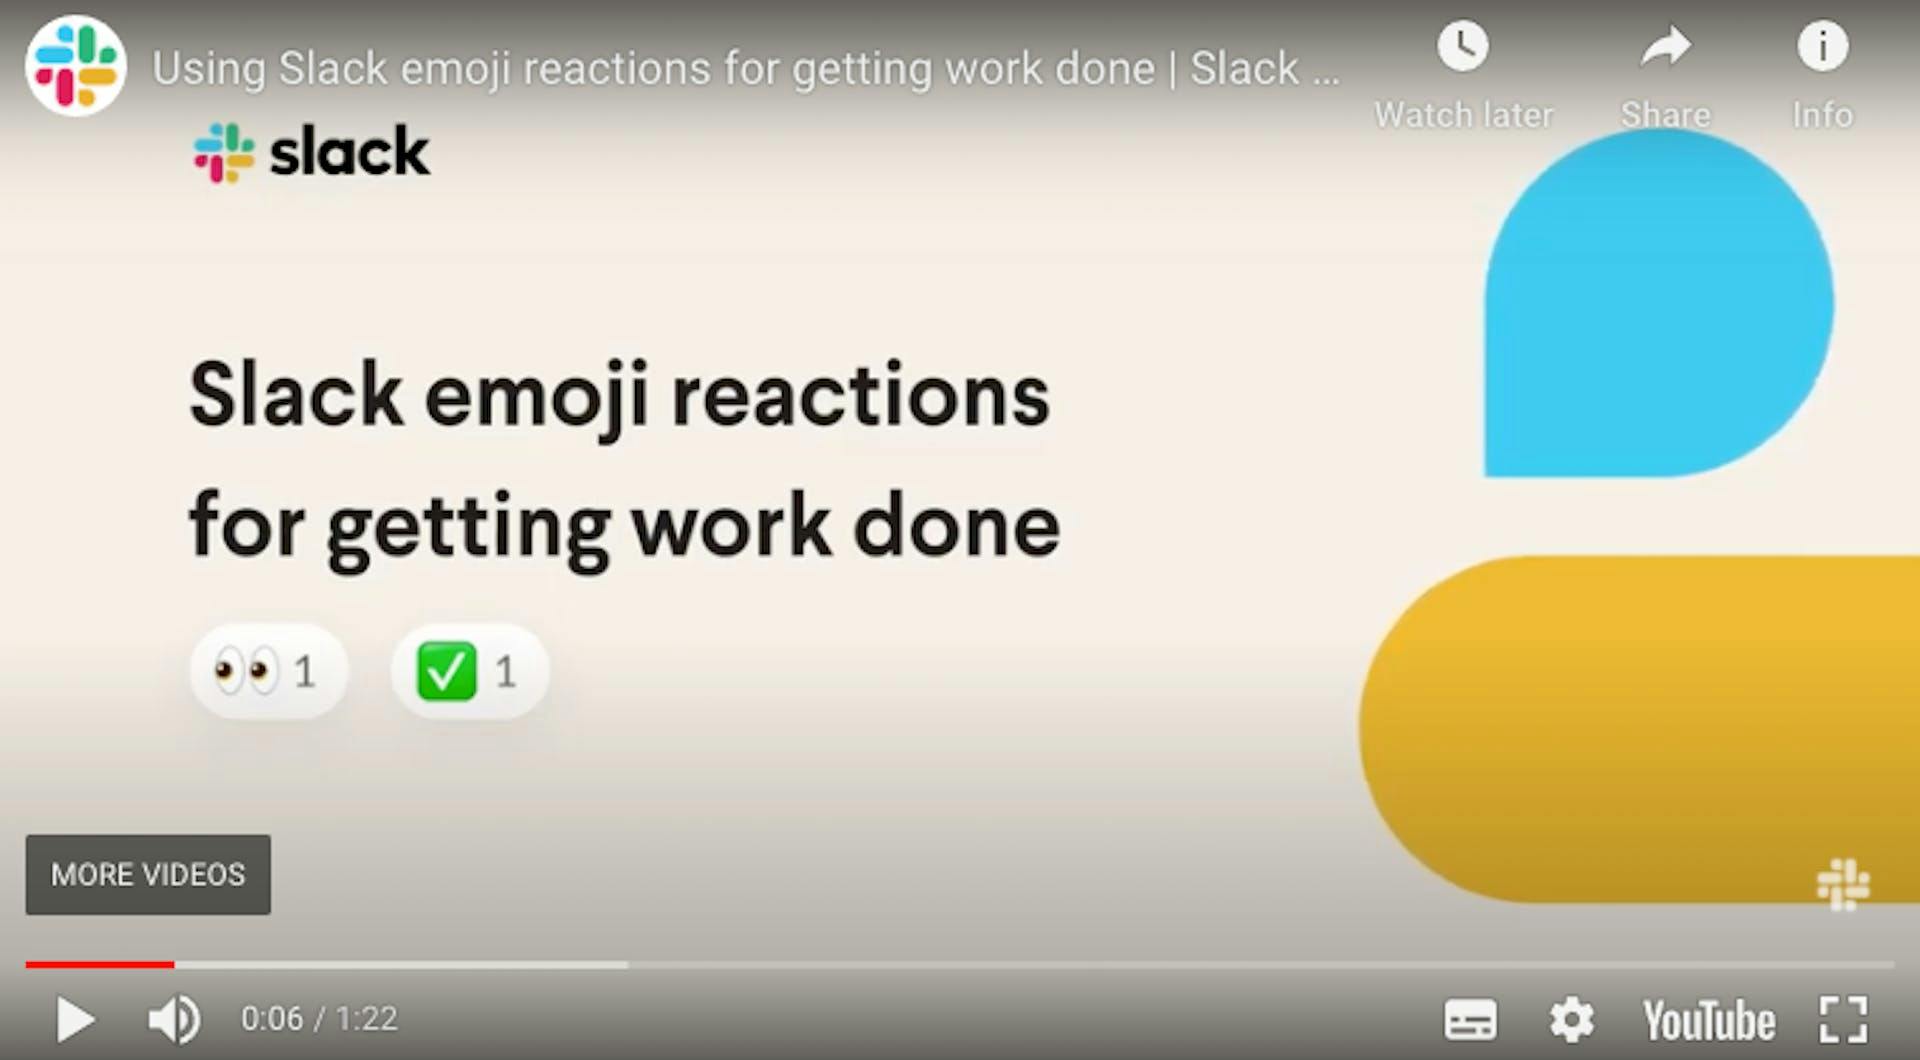 Slack's product video introduces emojis for its messaging platform